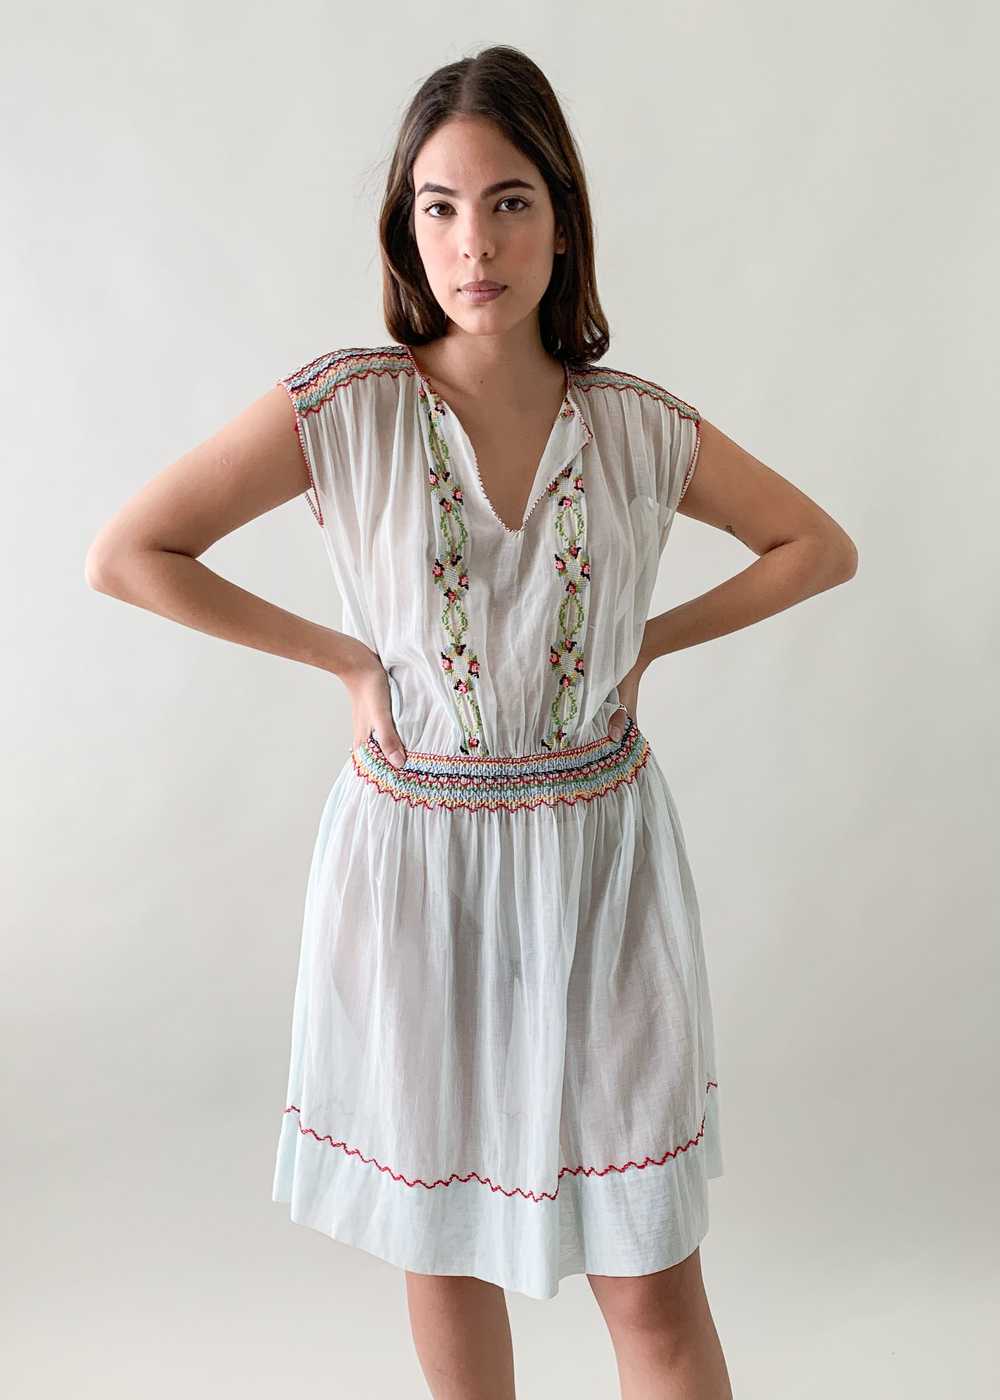 Vintage 1920s Embroidered Cotton Dress - image 4